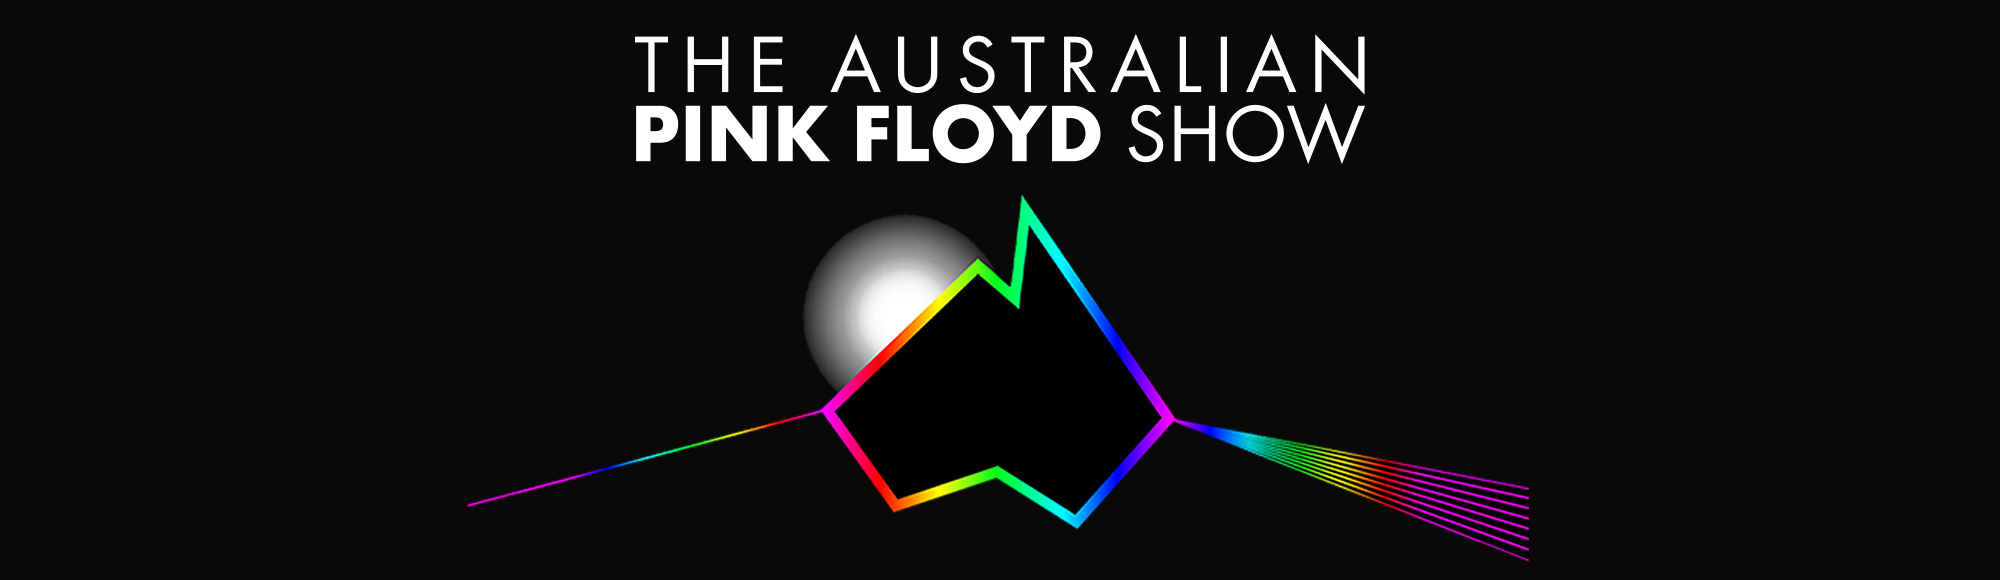 The Australian Pink Floyd Show show